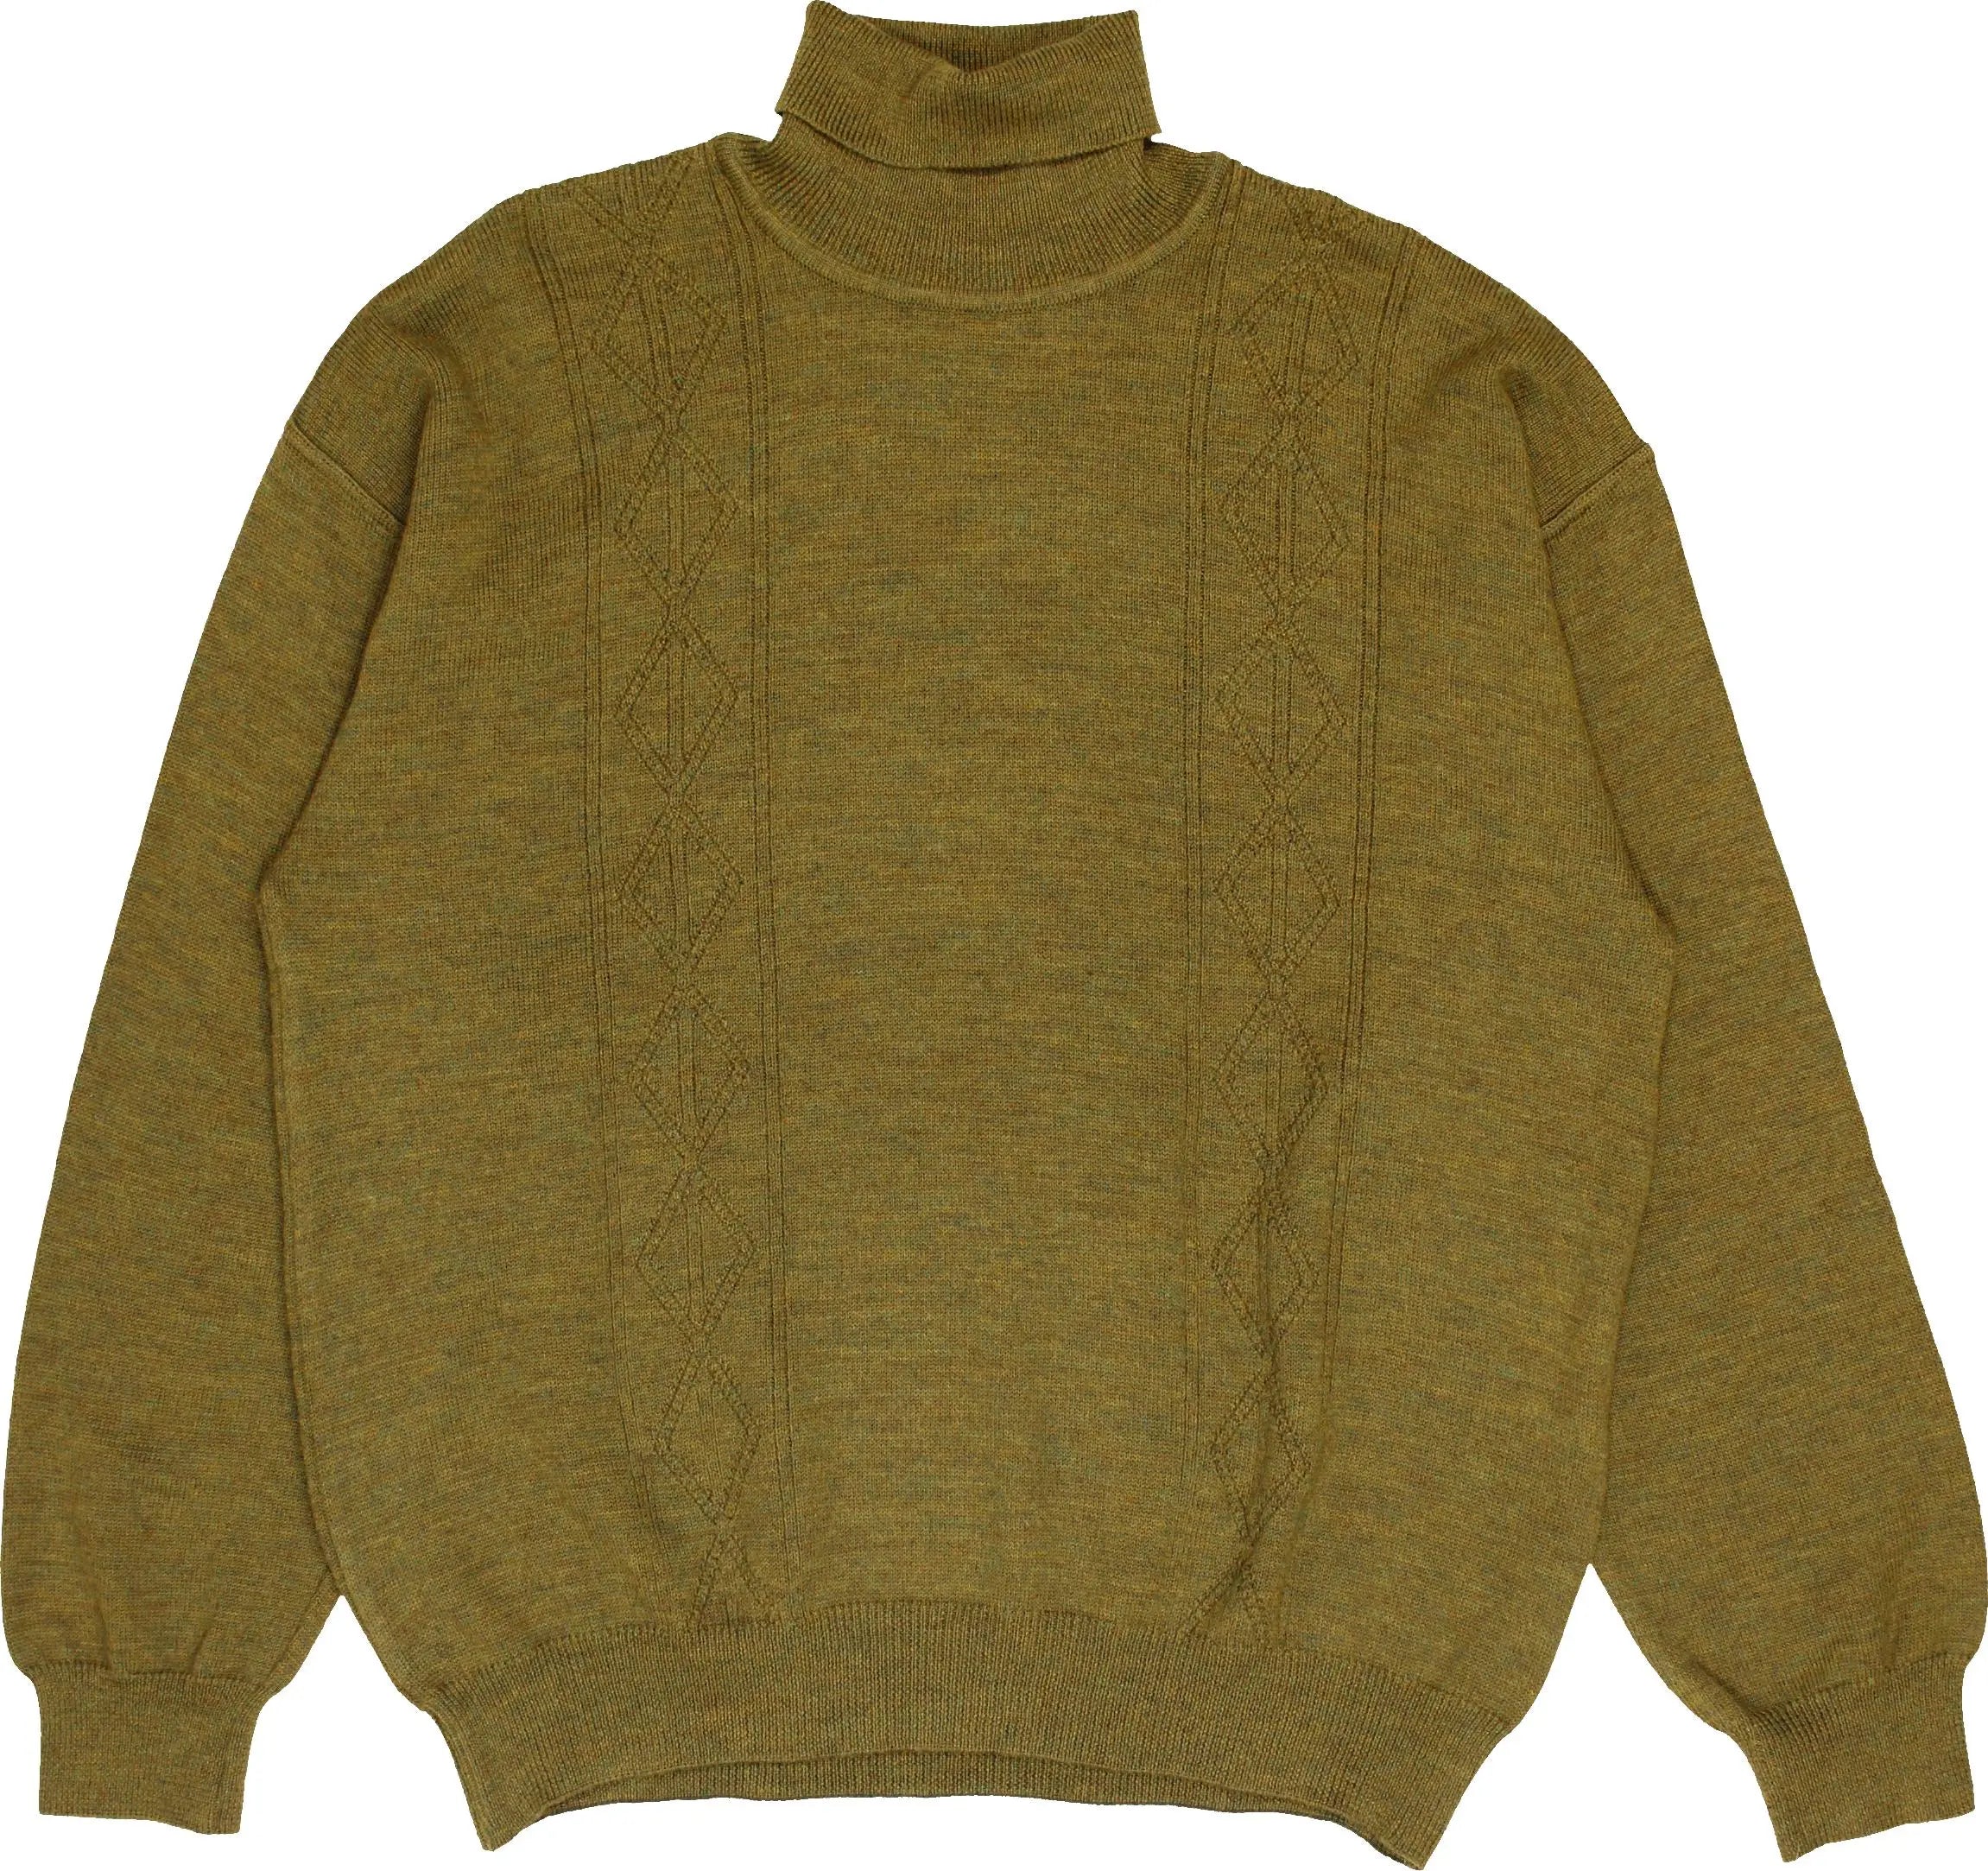 Kirschbaum - Green Wool Turtleneck Jumper- ThriftTale.com - Vintage and second handclothing